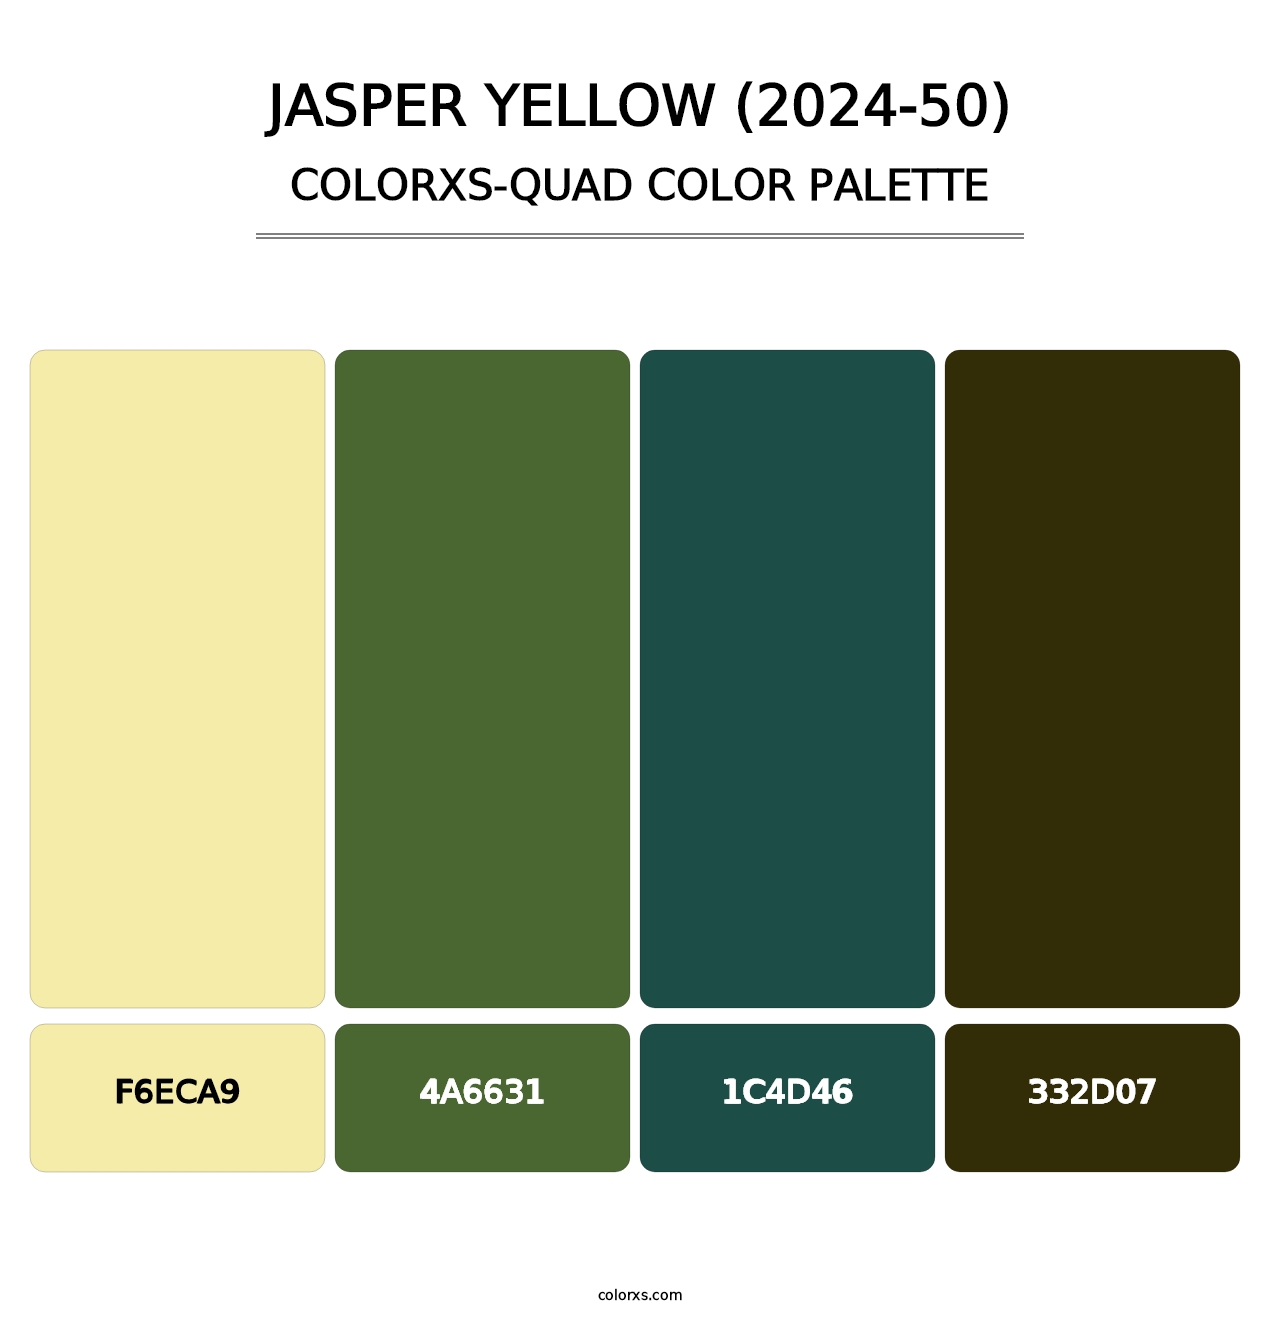 Jasper Yellow (2024-50) - Colorxs Quad Palette